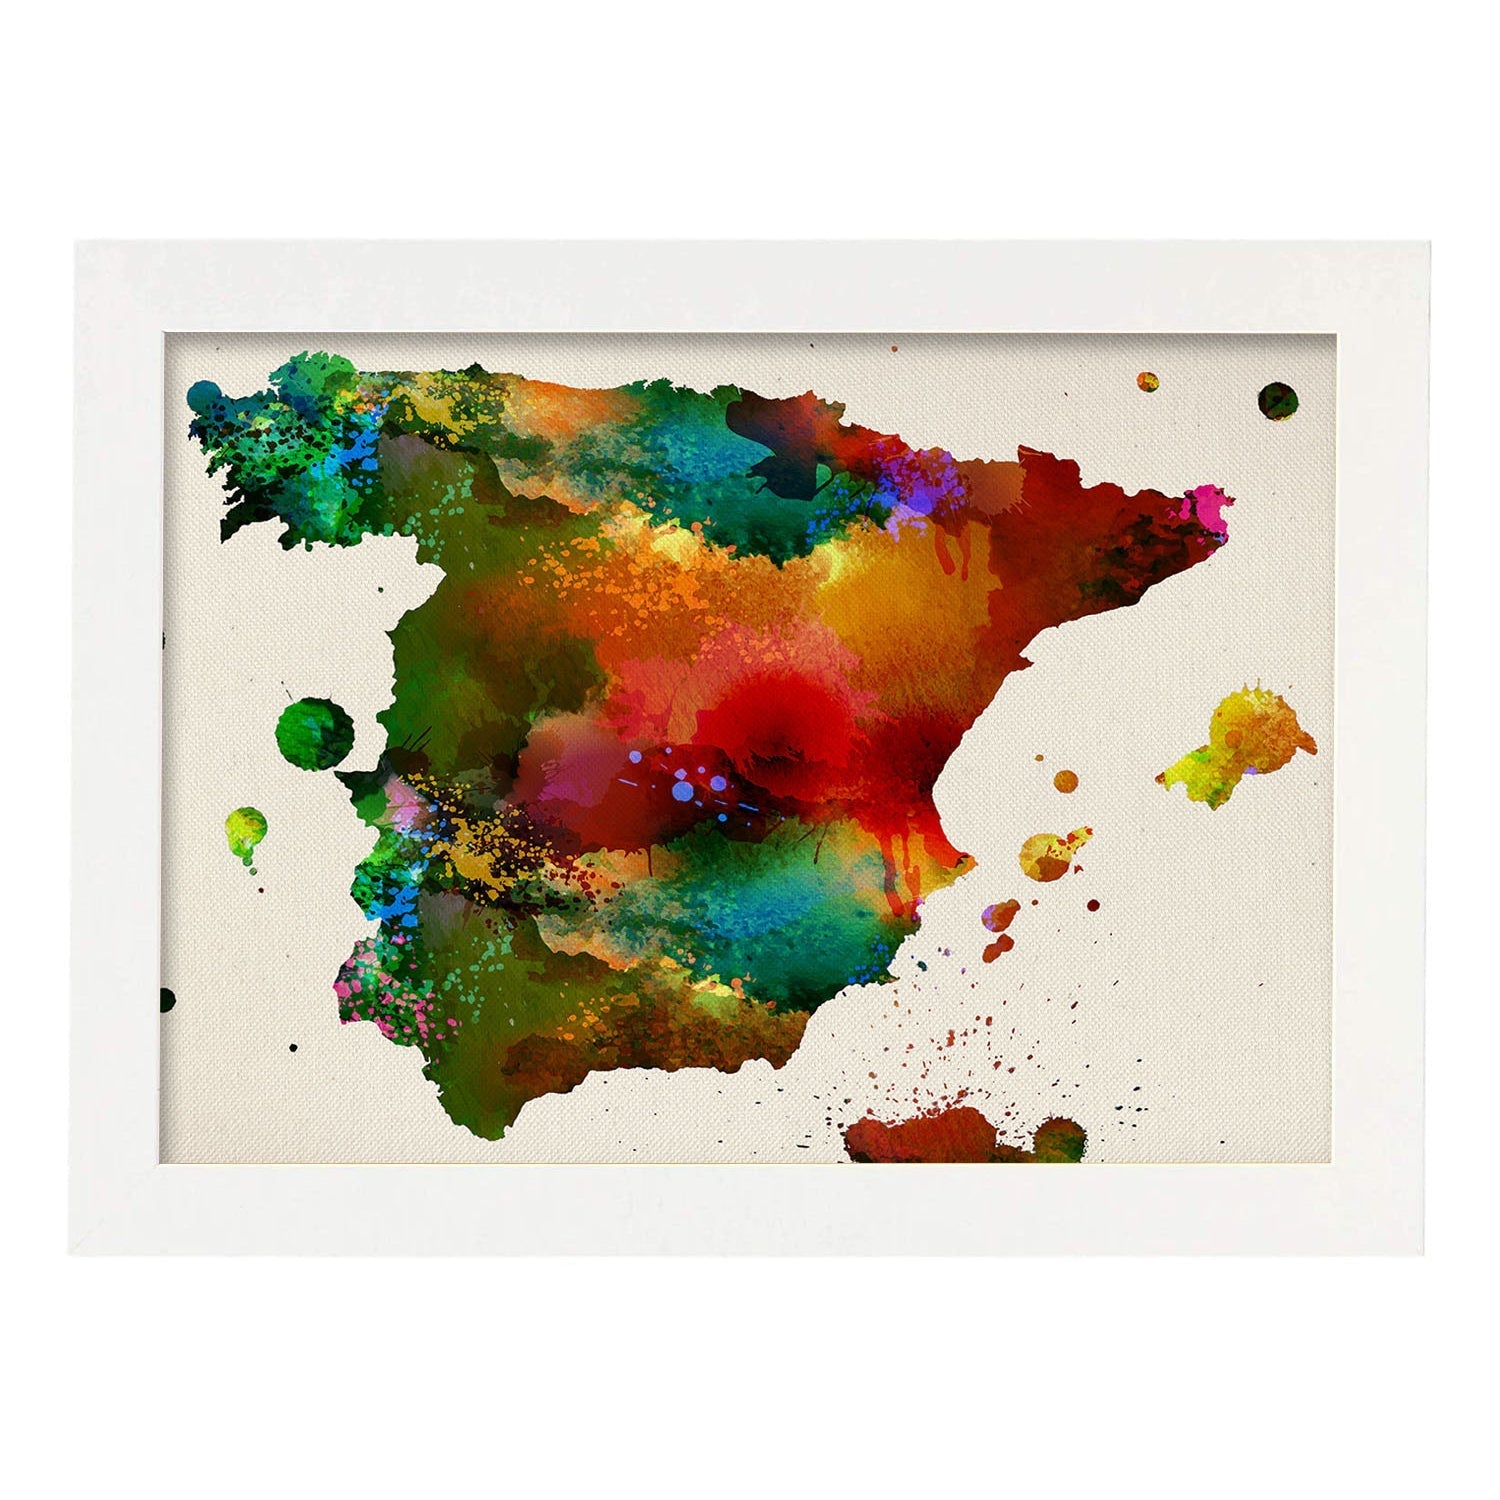 Poster de Mapa Espana 3. Láminas e ilustraciones de ciudades, comunidades, y mapas de España.-Artwork-Nacnic-A3-Marco Blanco-Nacnic Estudio SL